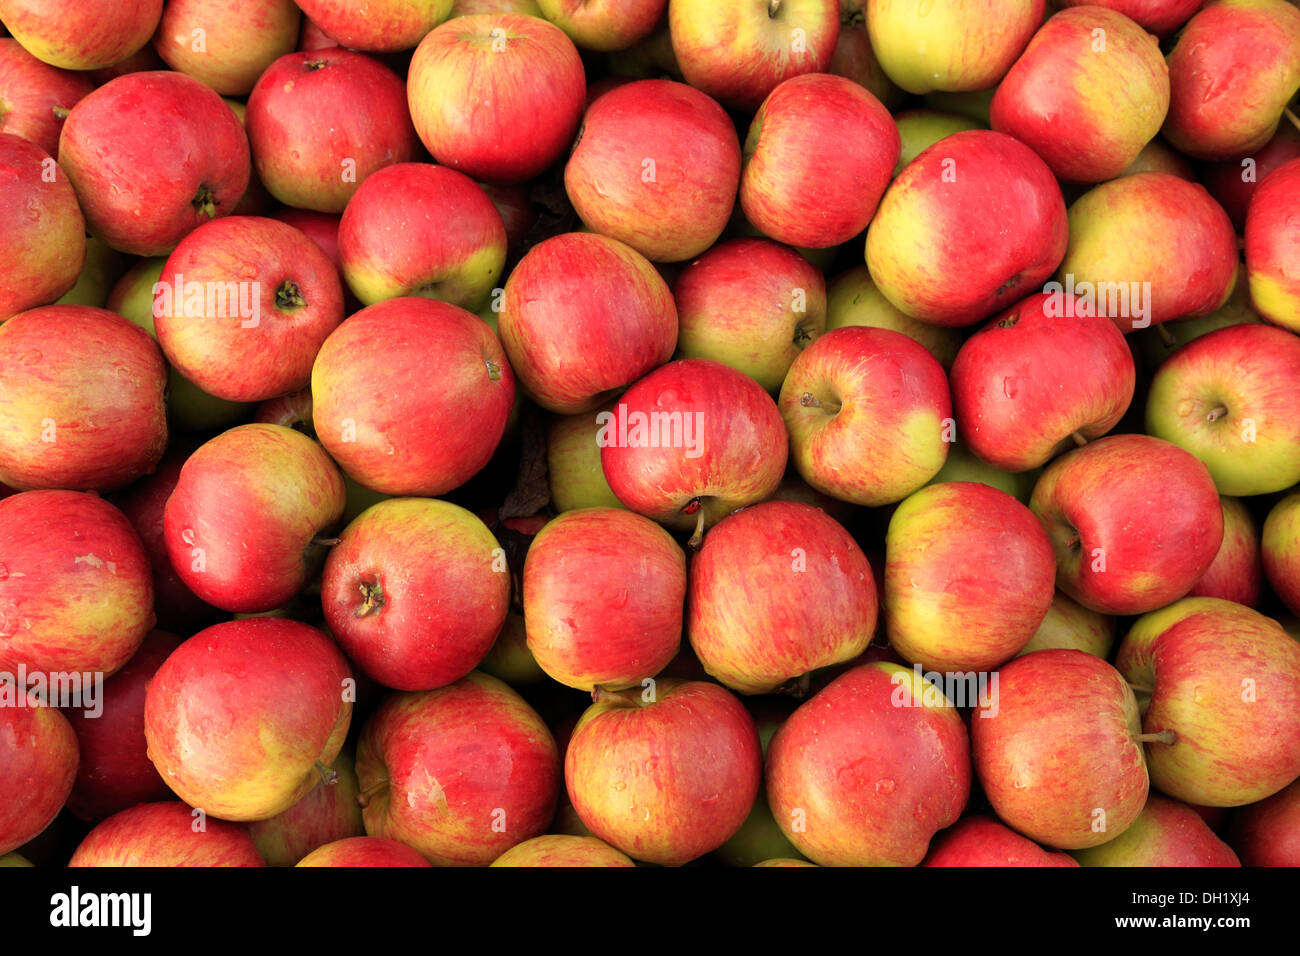 Apple 'Laxton's Fortune', Farm shop mostrar, manzanas UK Foto de stock